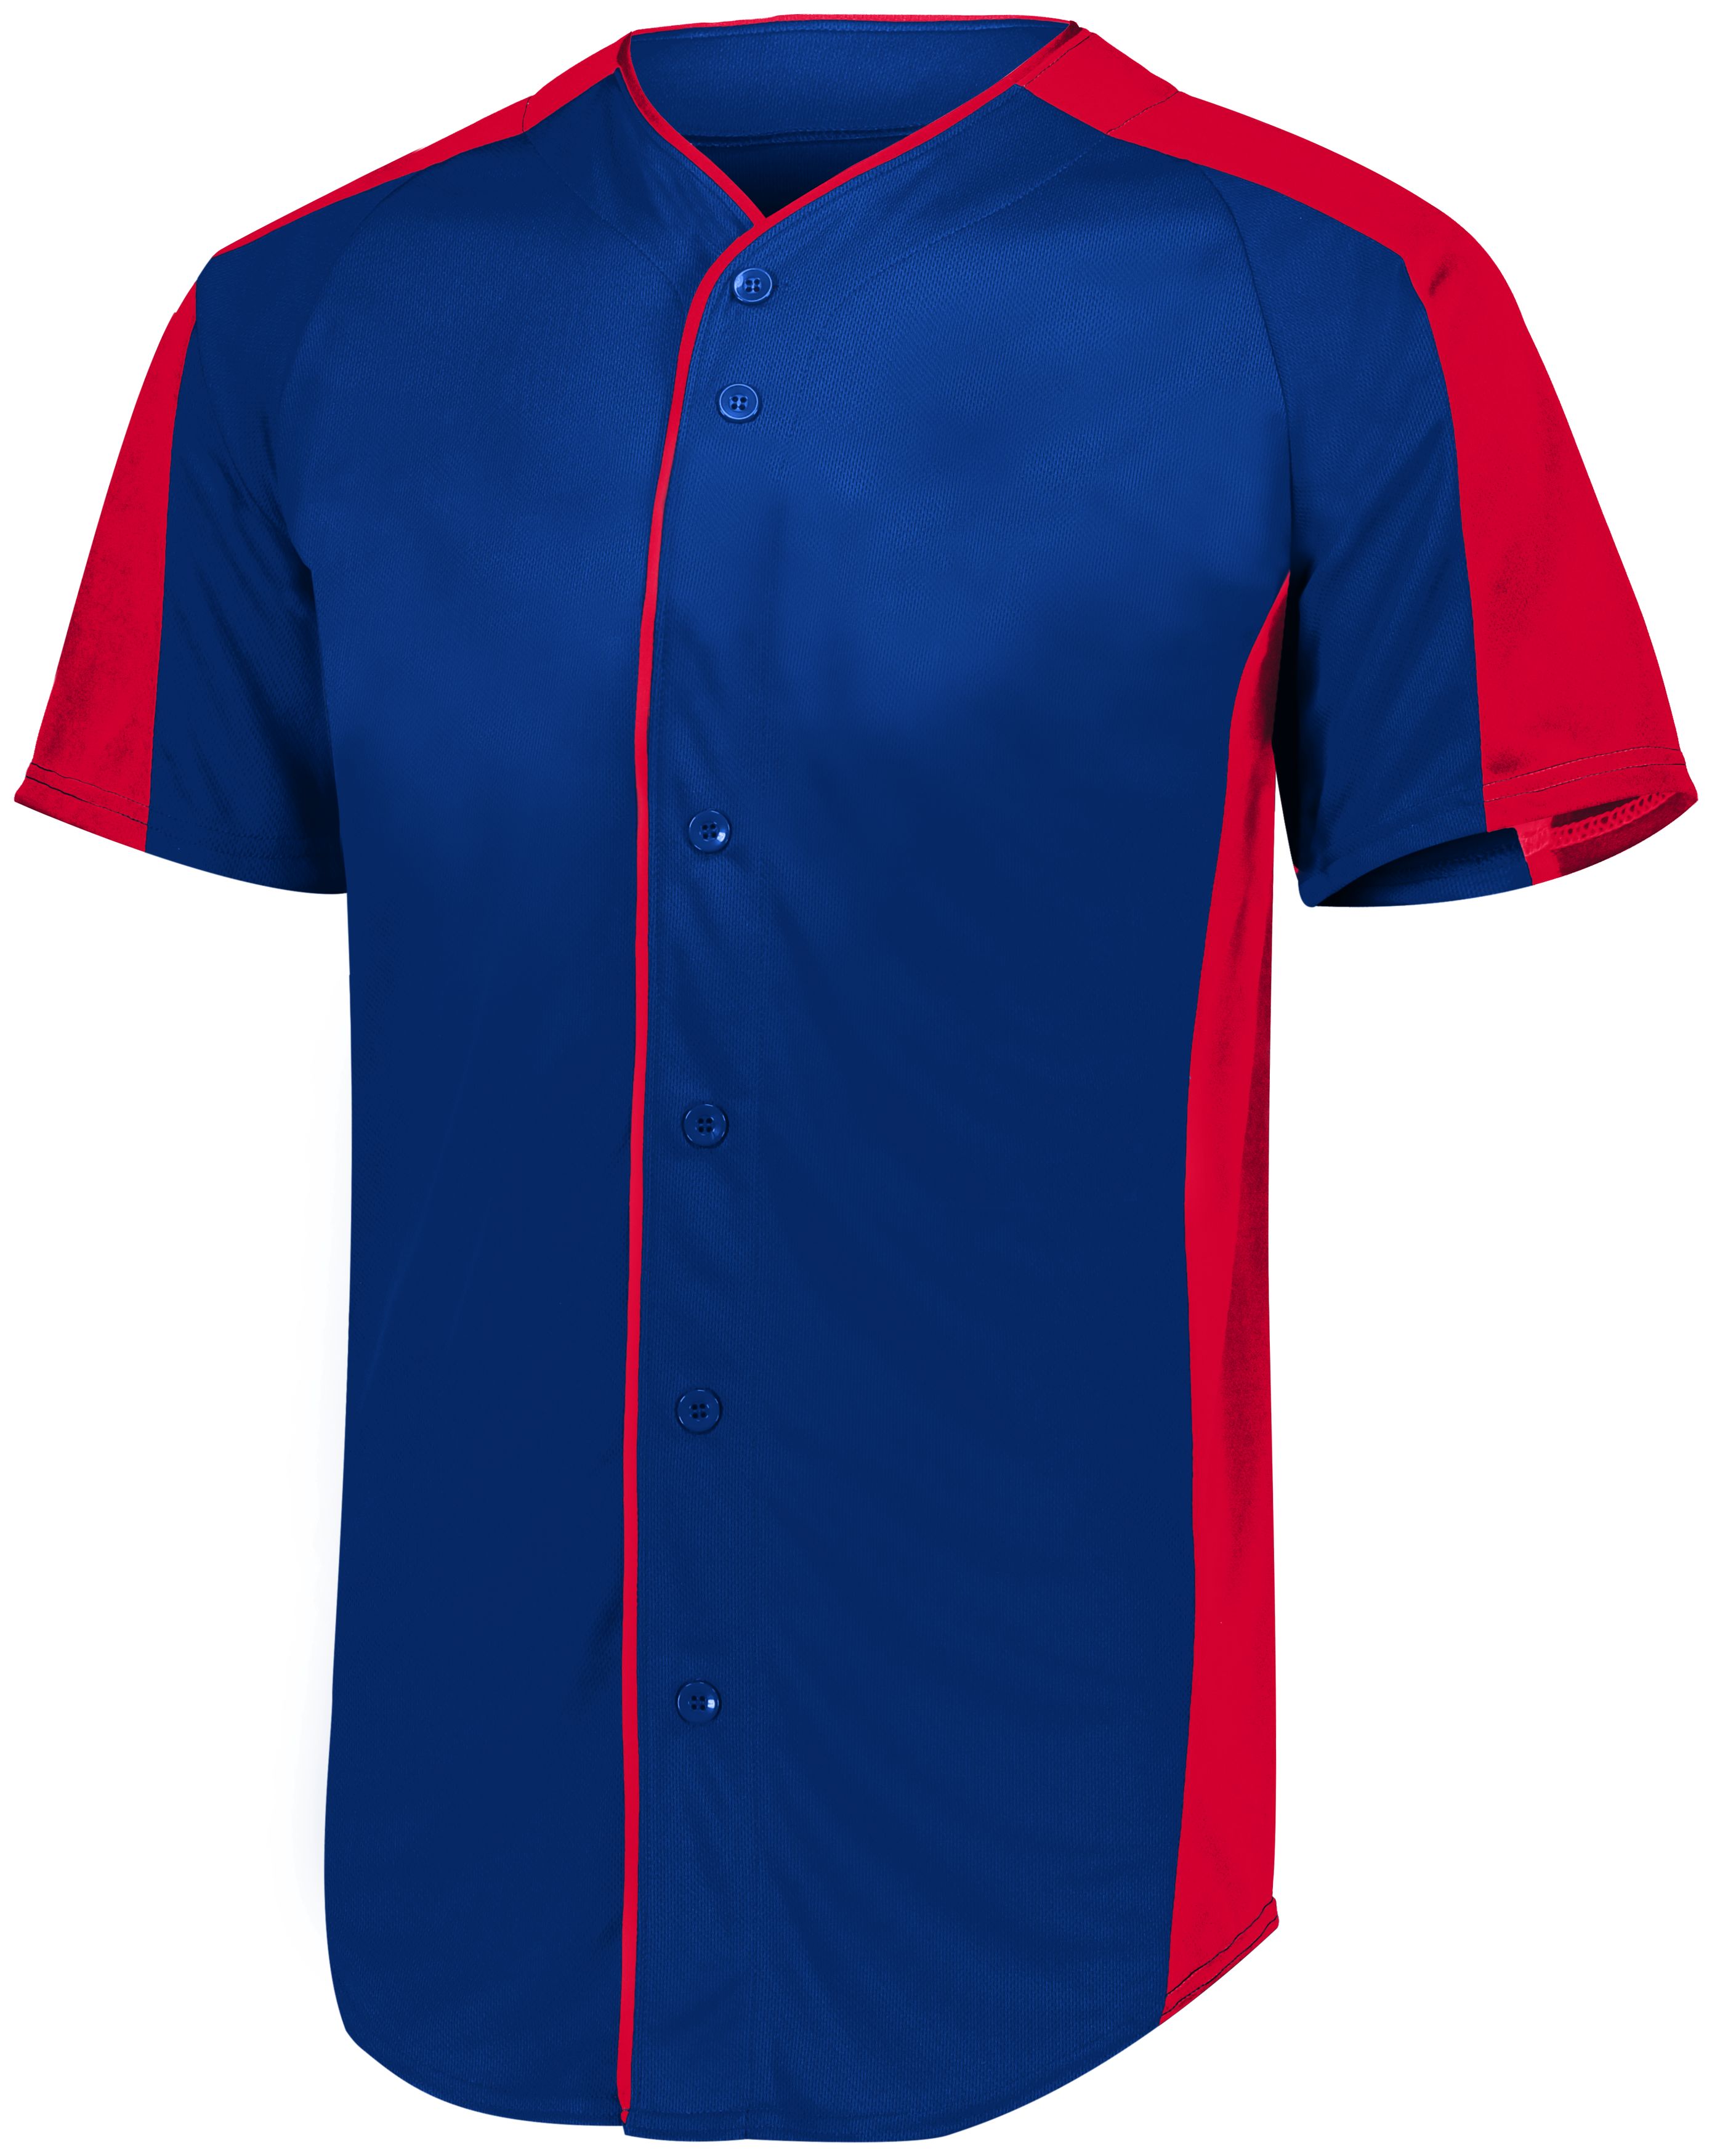 Augusta Sportswear 1656 - Youth Full-Button Baseball Jersey